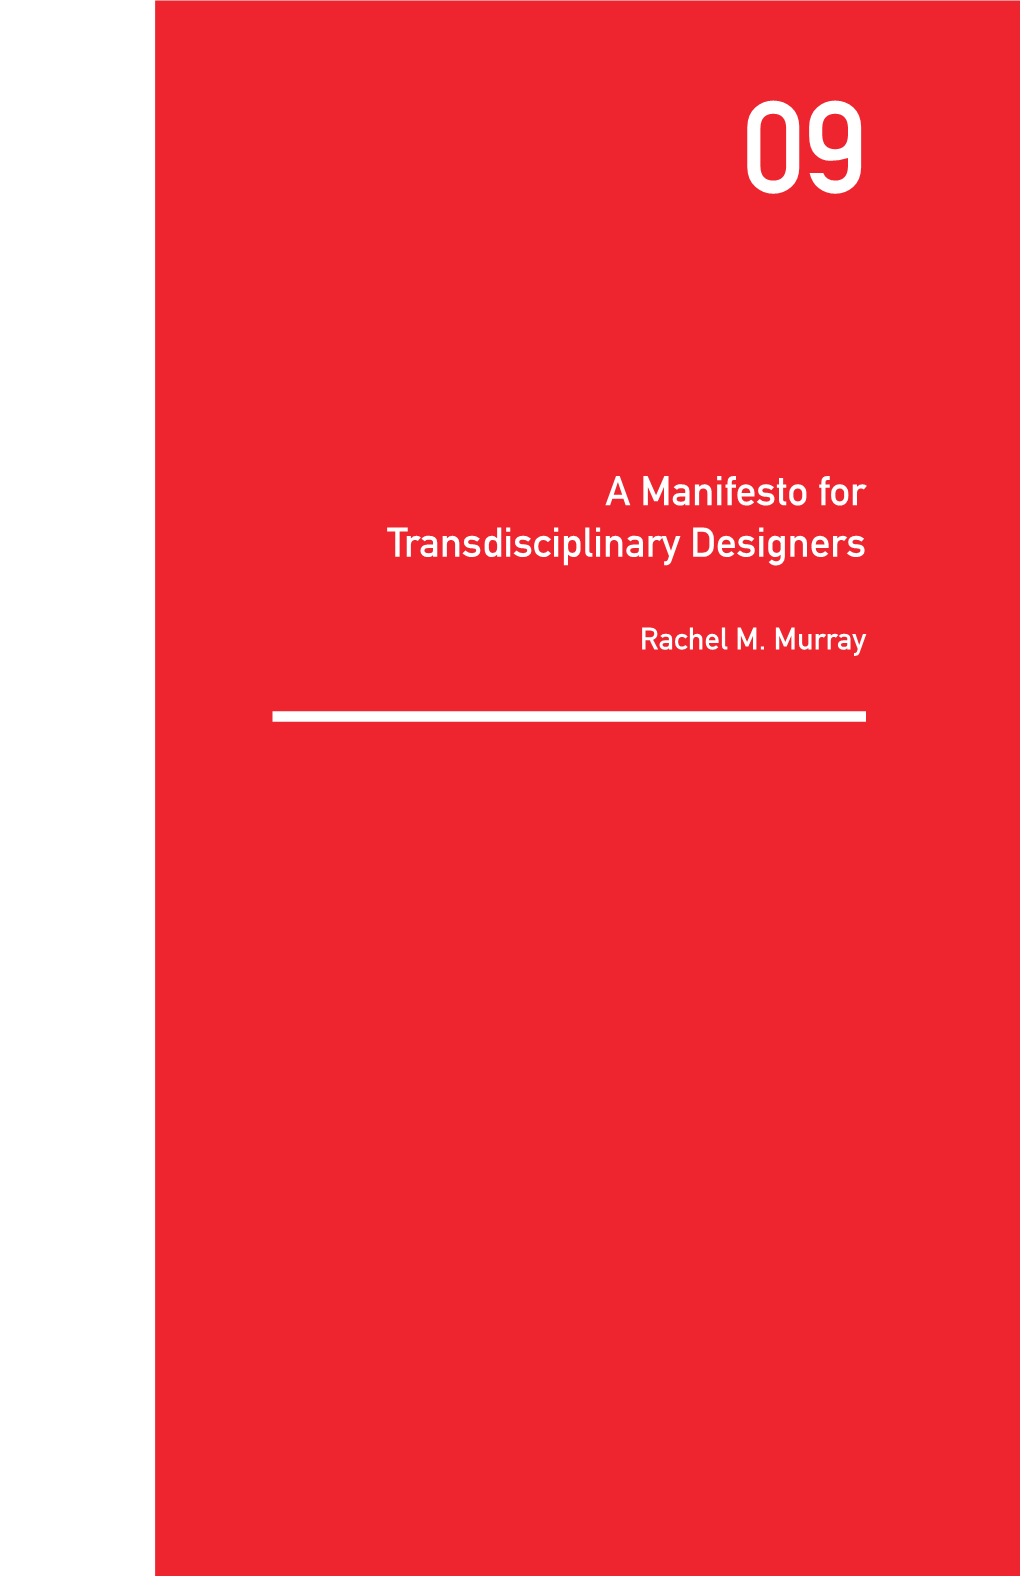 A Manifesto for Transdisciplinary Designers